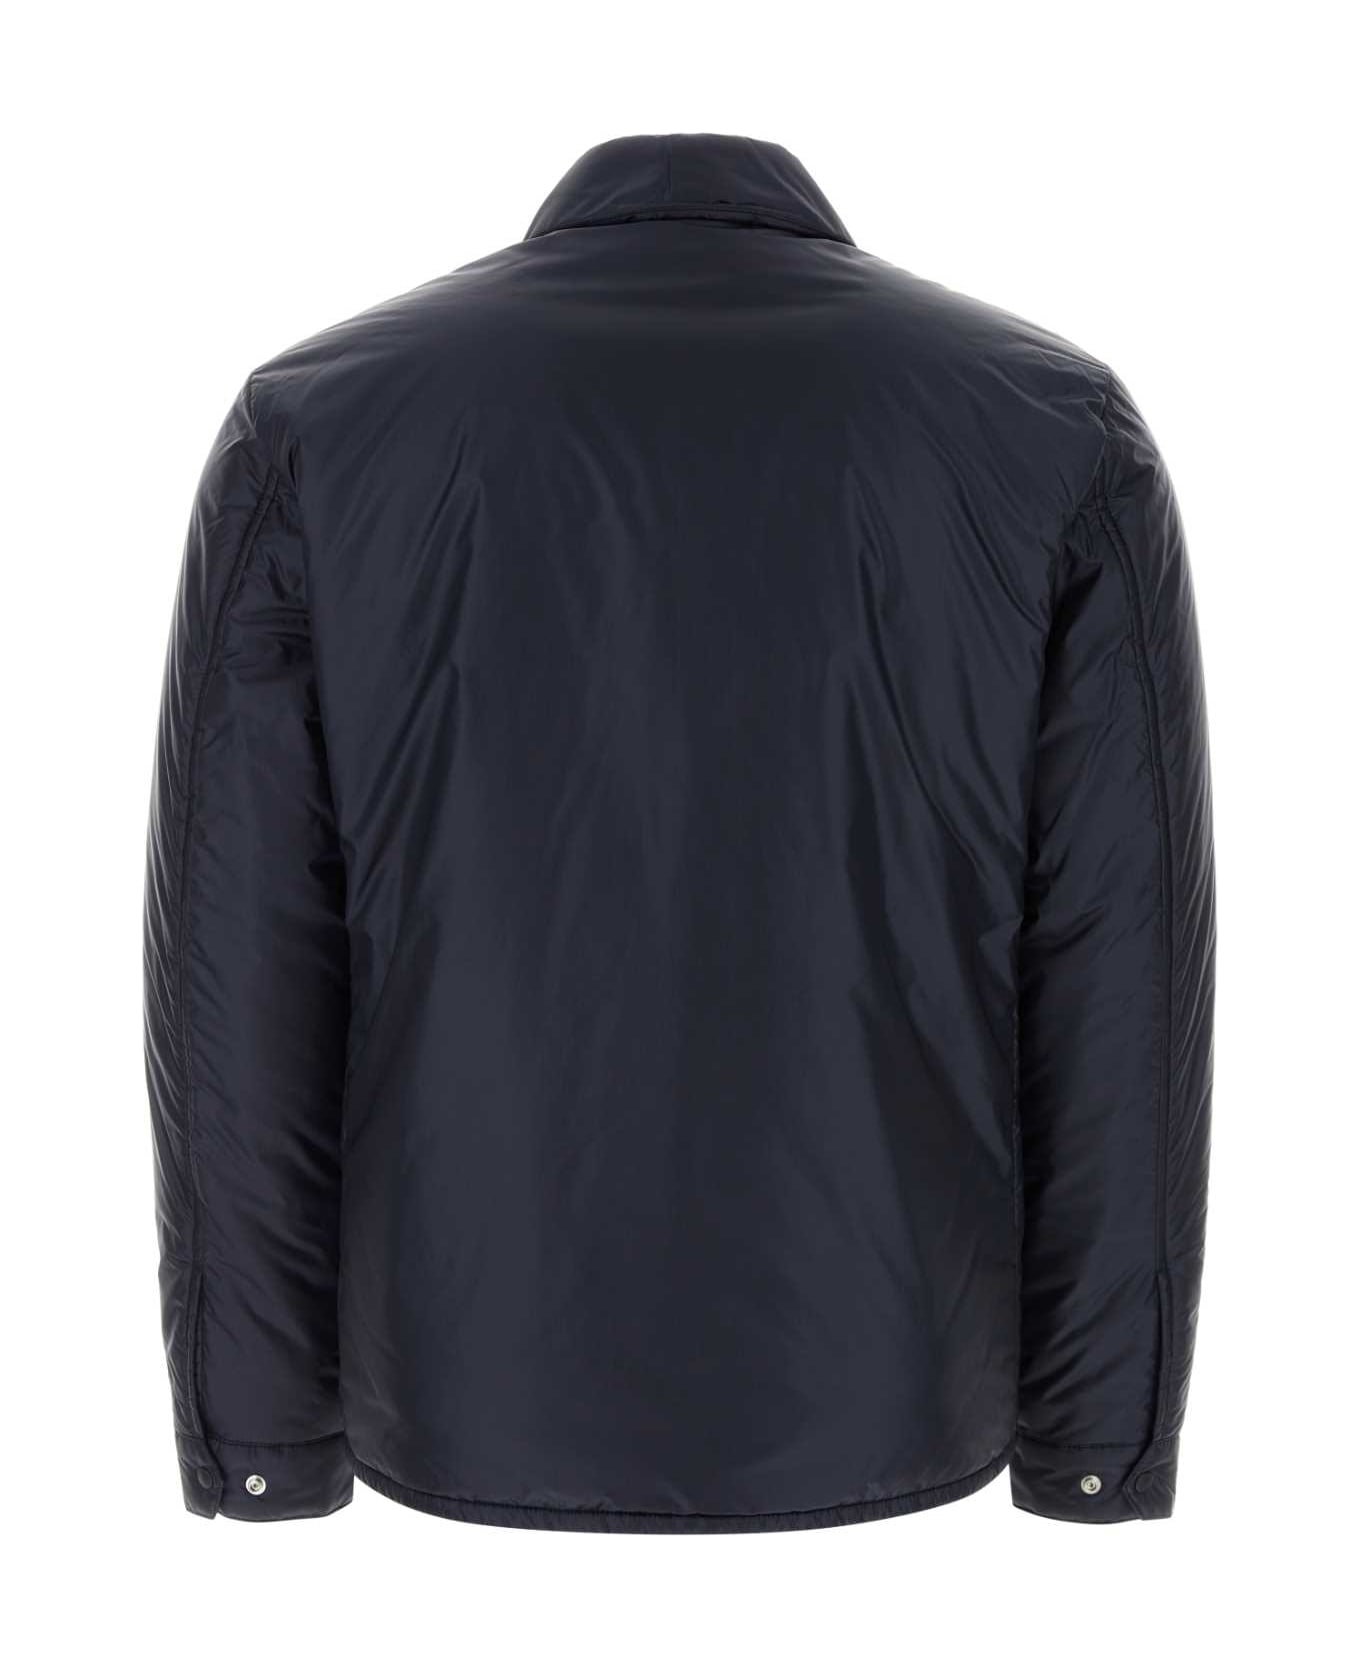 Woolrich Midnight Blue Nylon Jacket - 3989